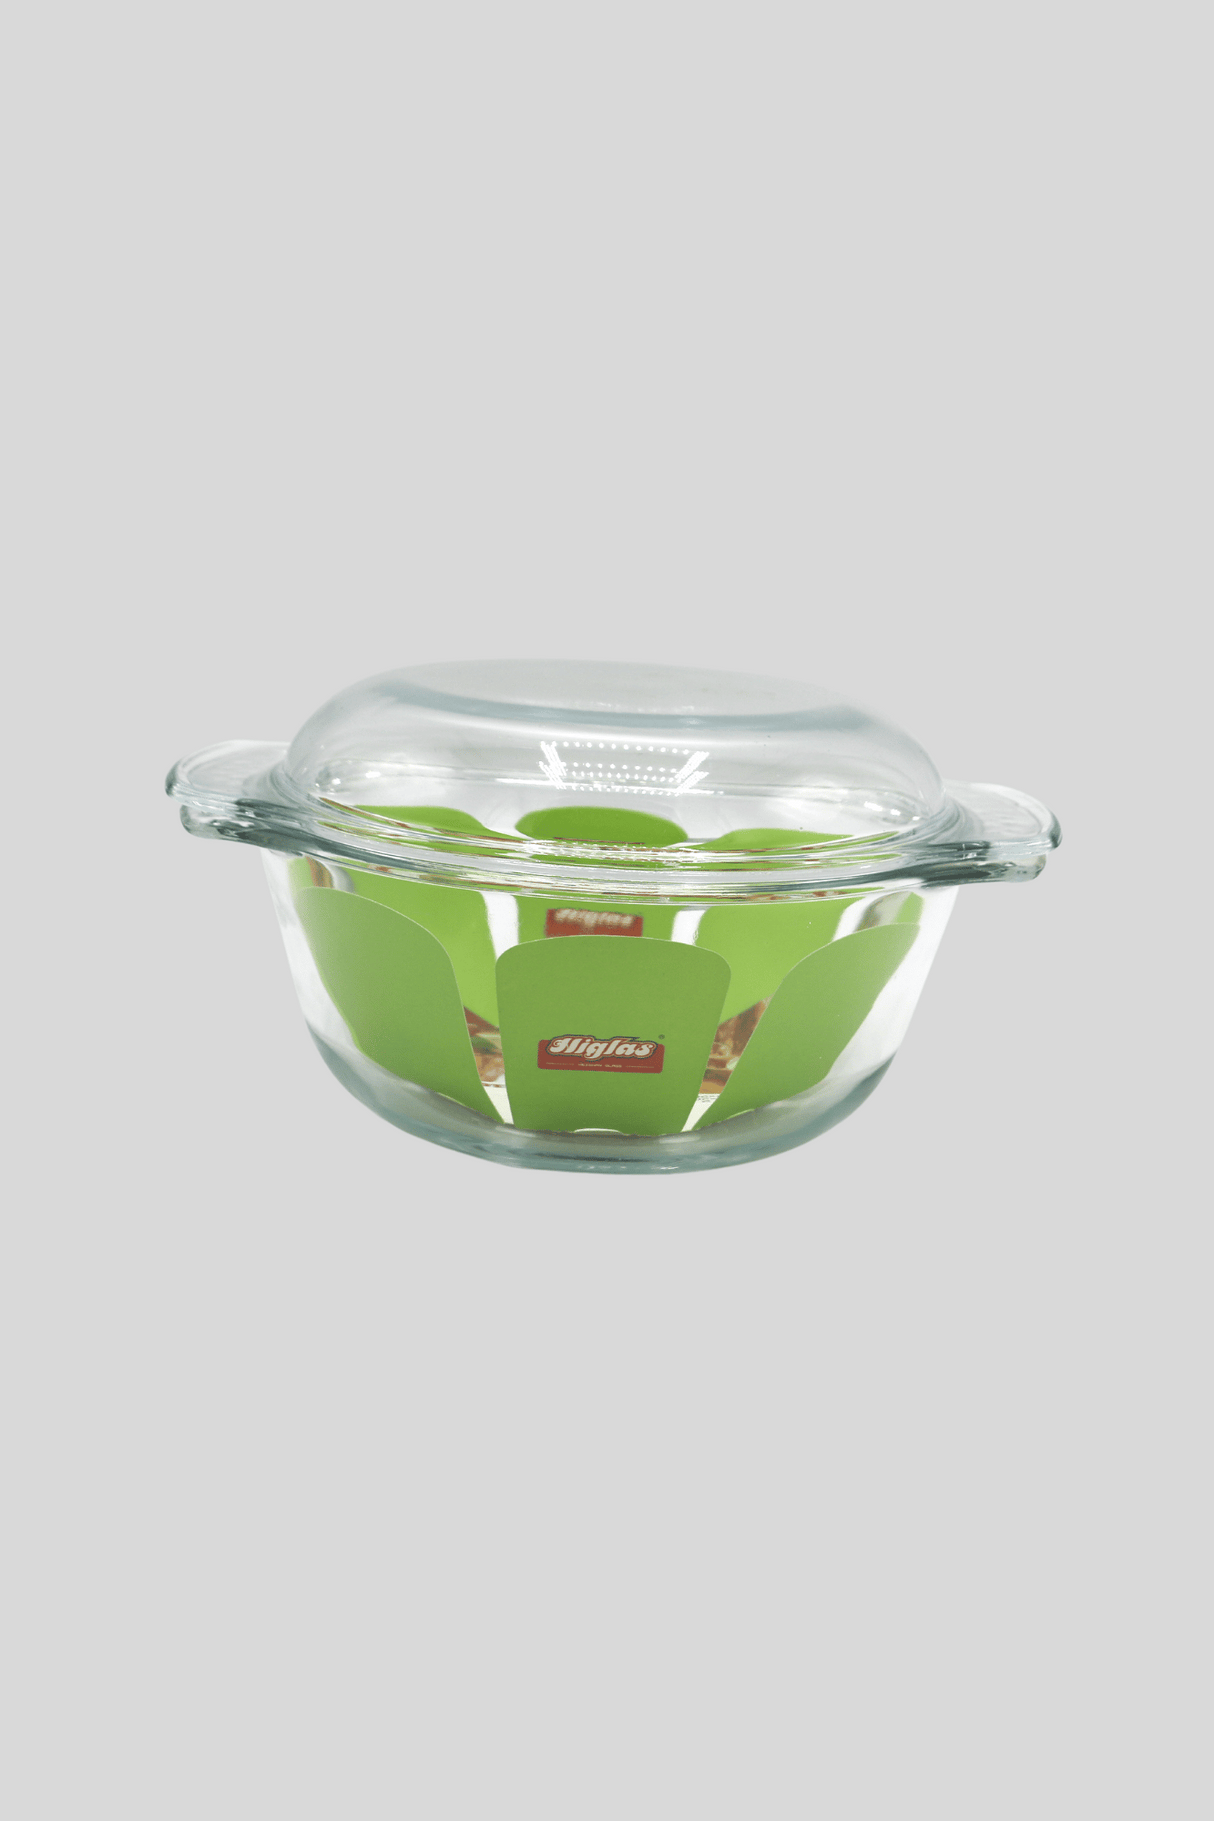 higlas bowl & lid round large 459